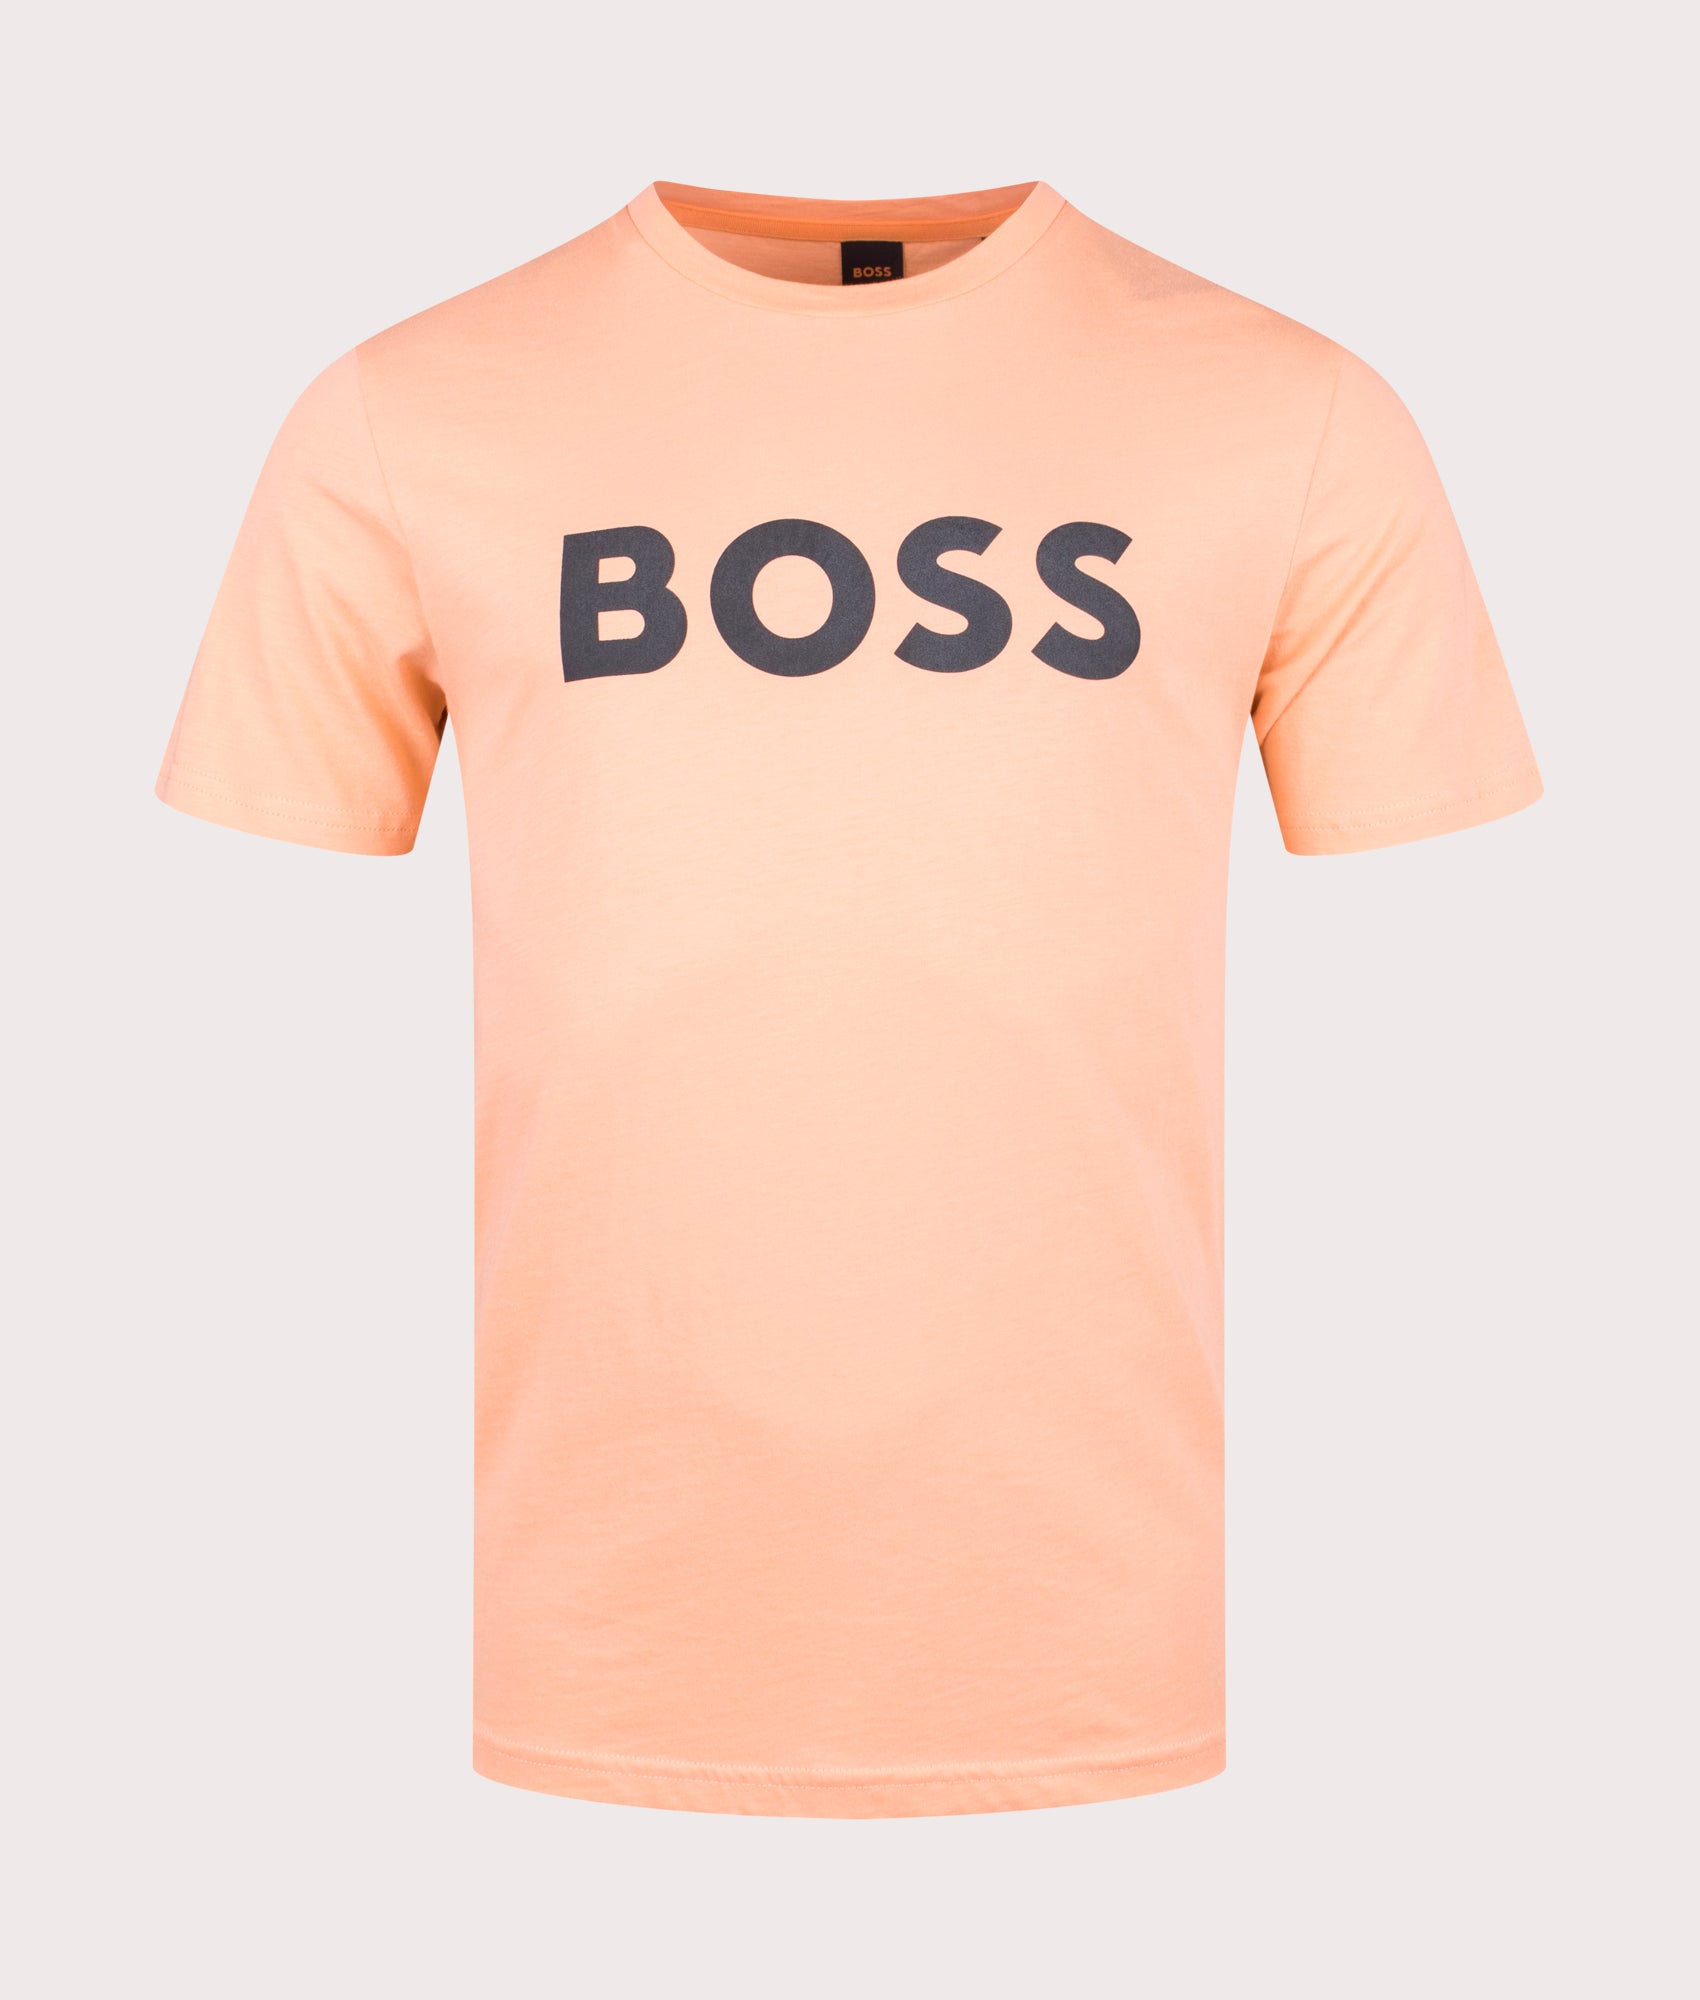 Thinking 1 T-Shirt Light/Pastel Orange | BOSS | EQVVS